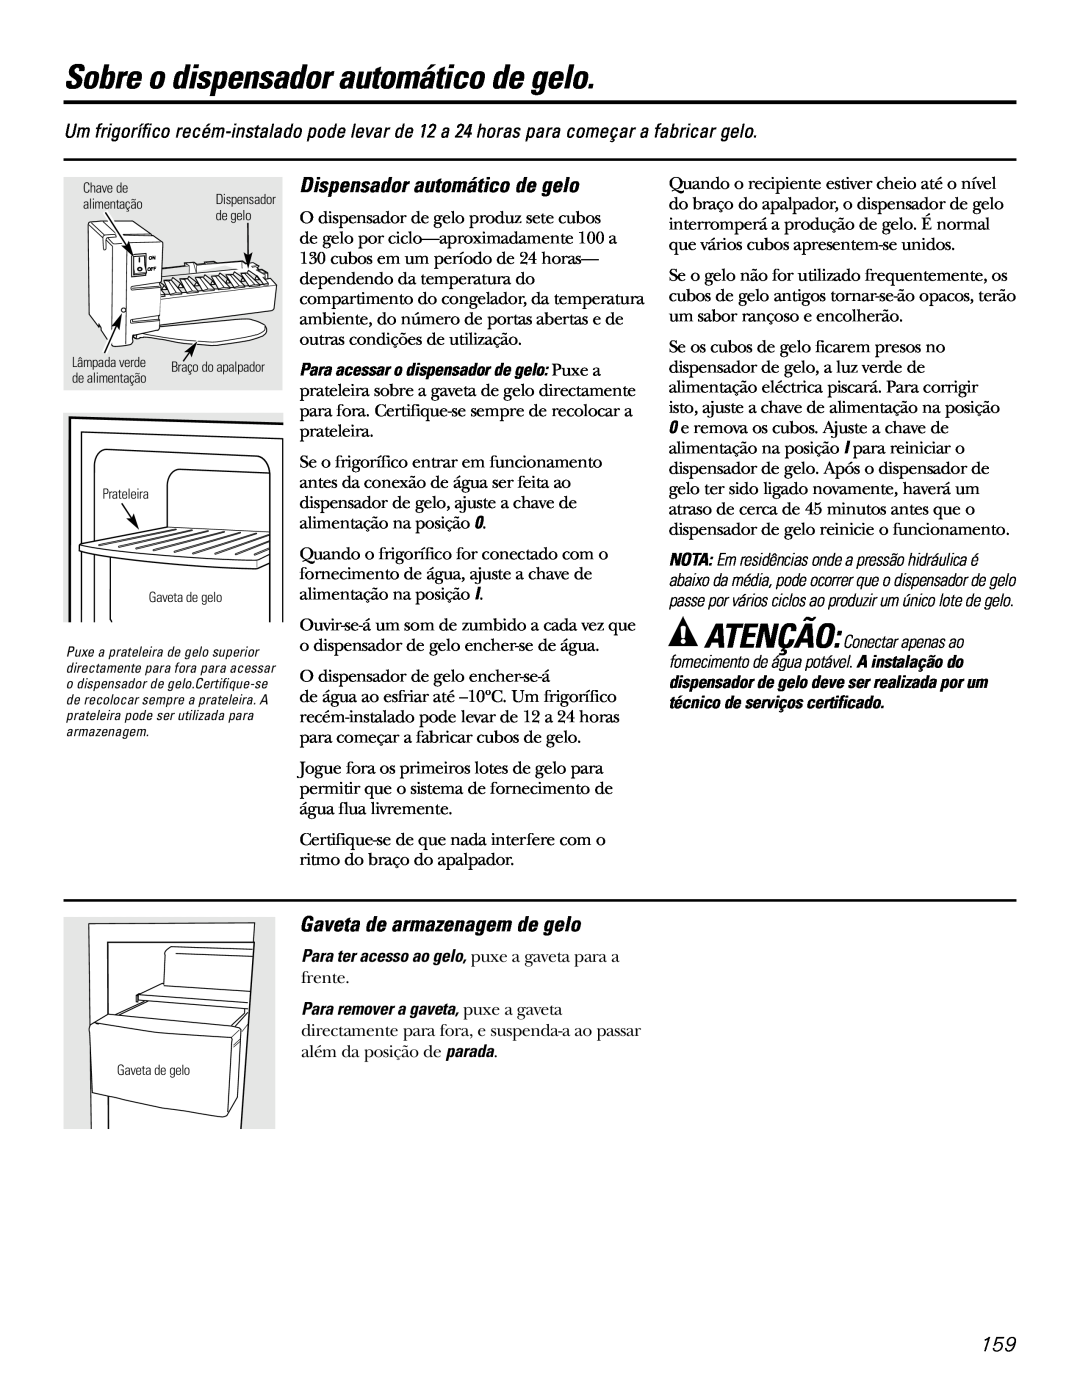 GE 21, 23, 25, 27, 29 installation instructions Sobre o dispensador automático de gelo, Dispensador automático de gelo 